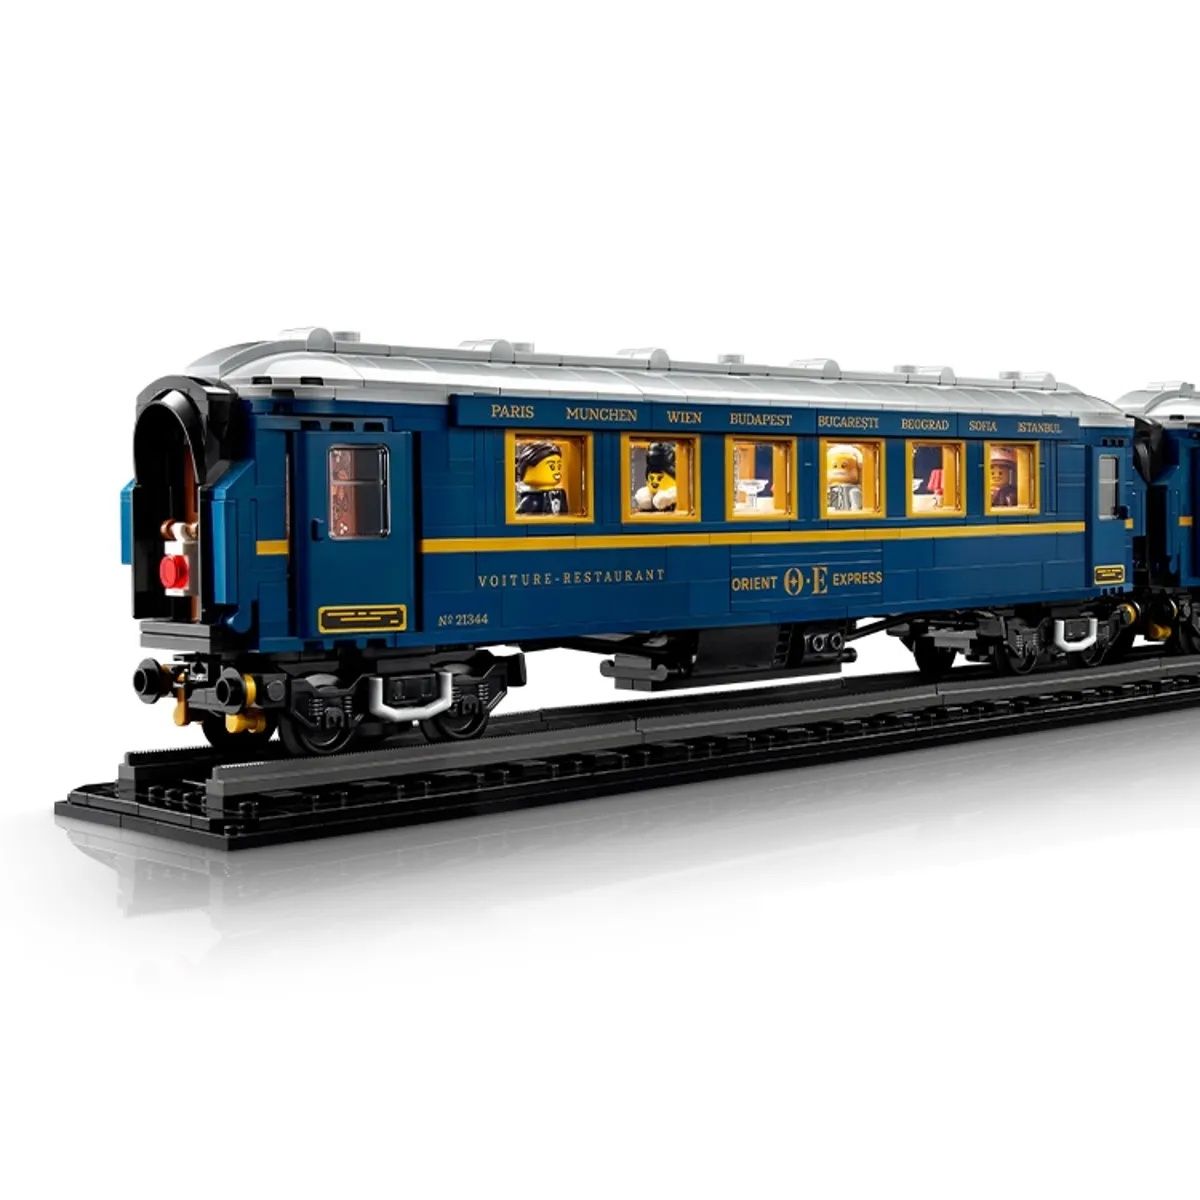 Lego IDEAS 21344 Orient Express Train Ориент Експрес 2540 части 8 фигу